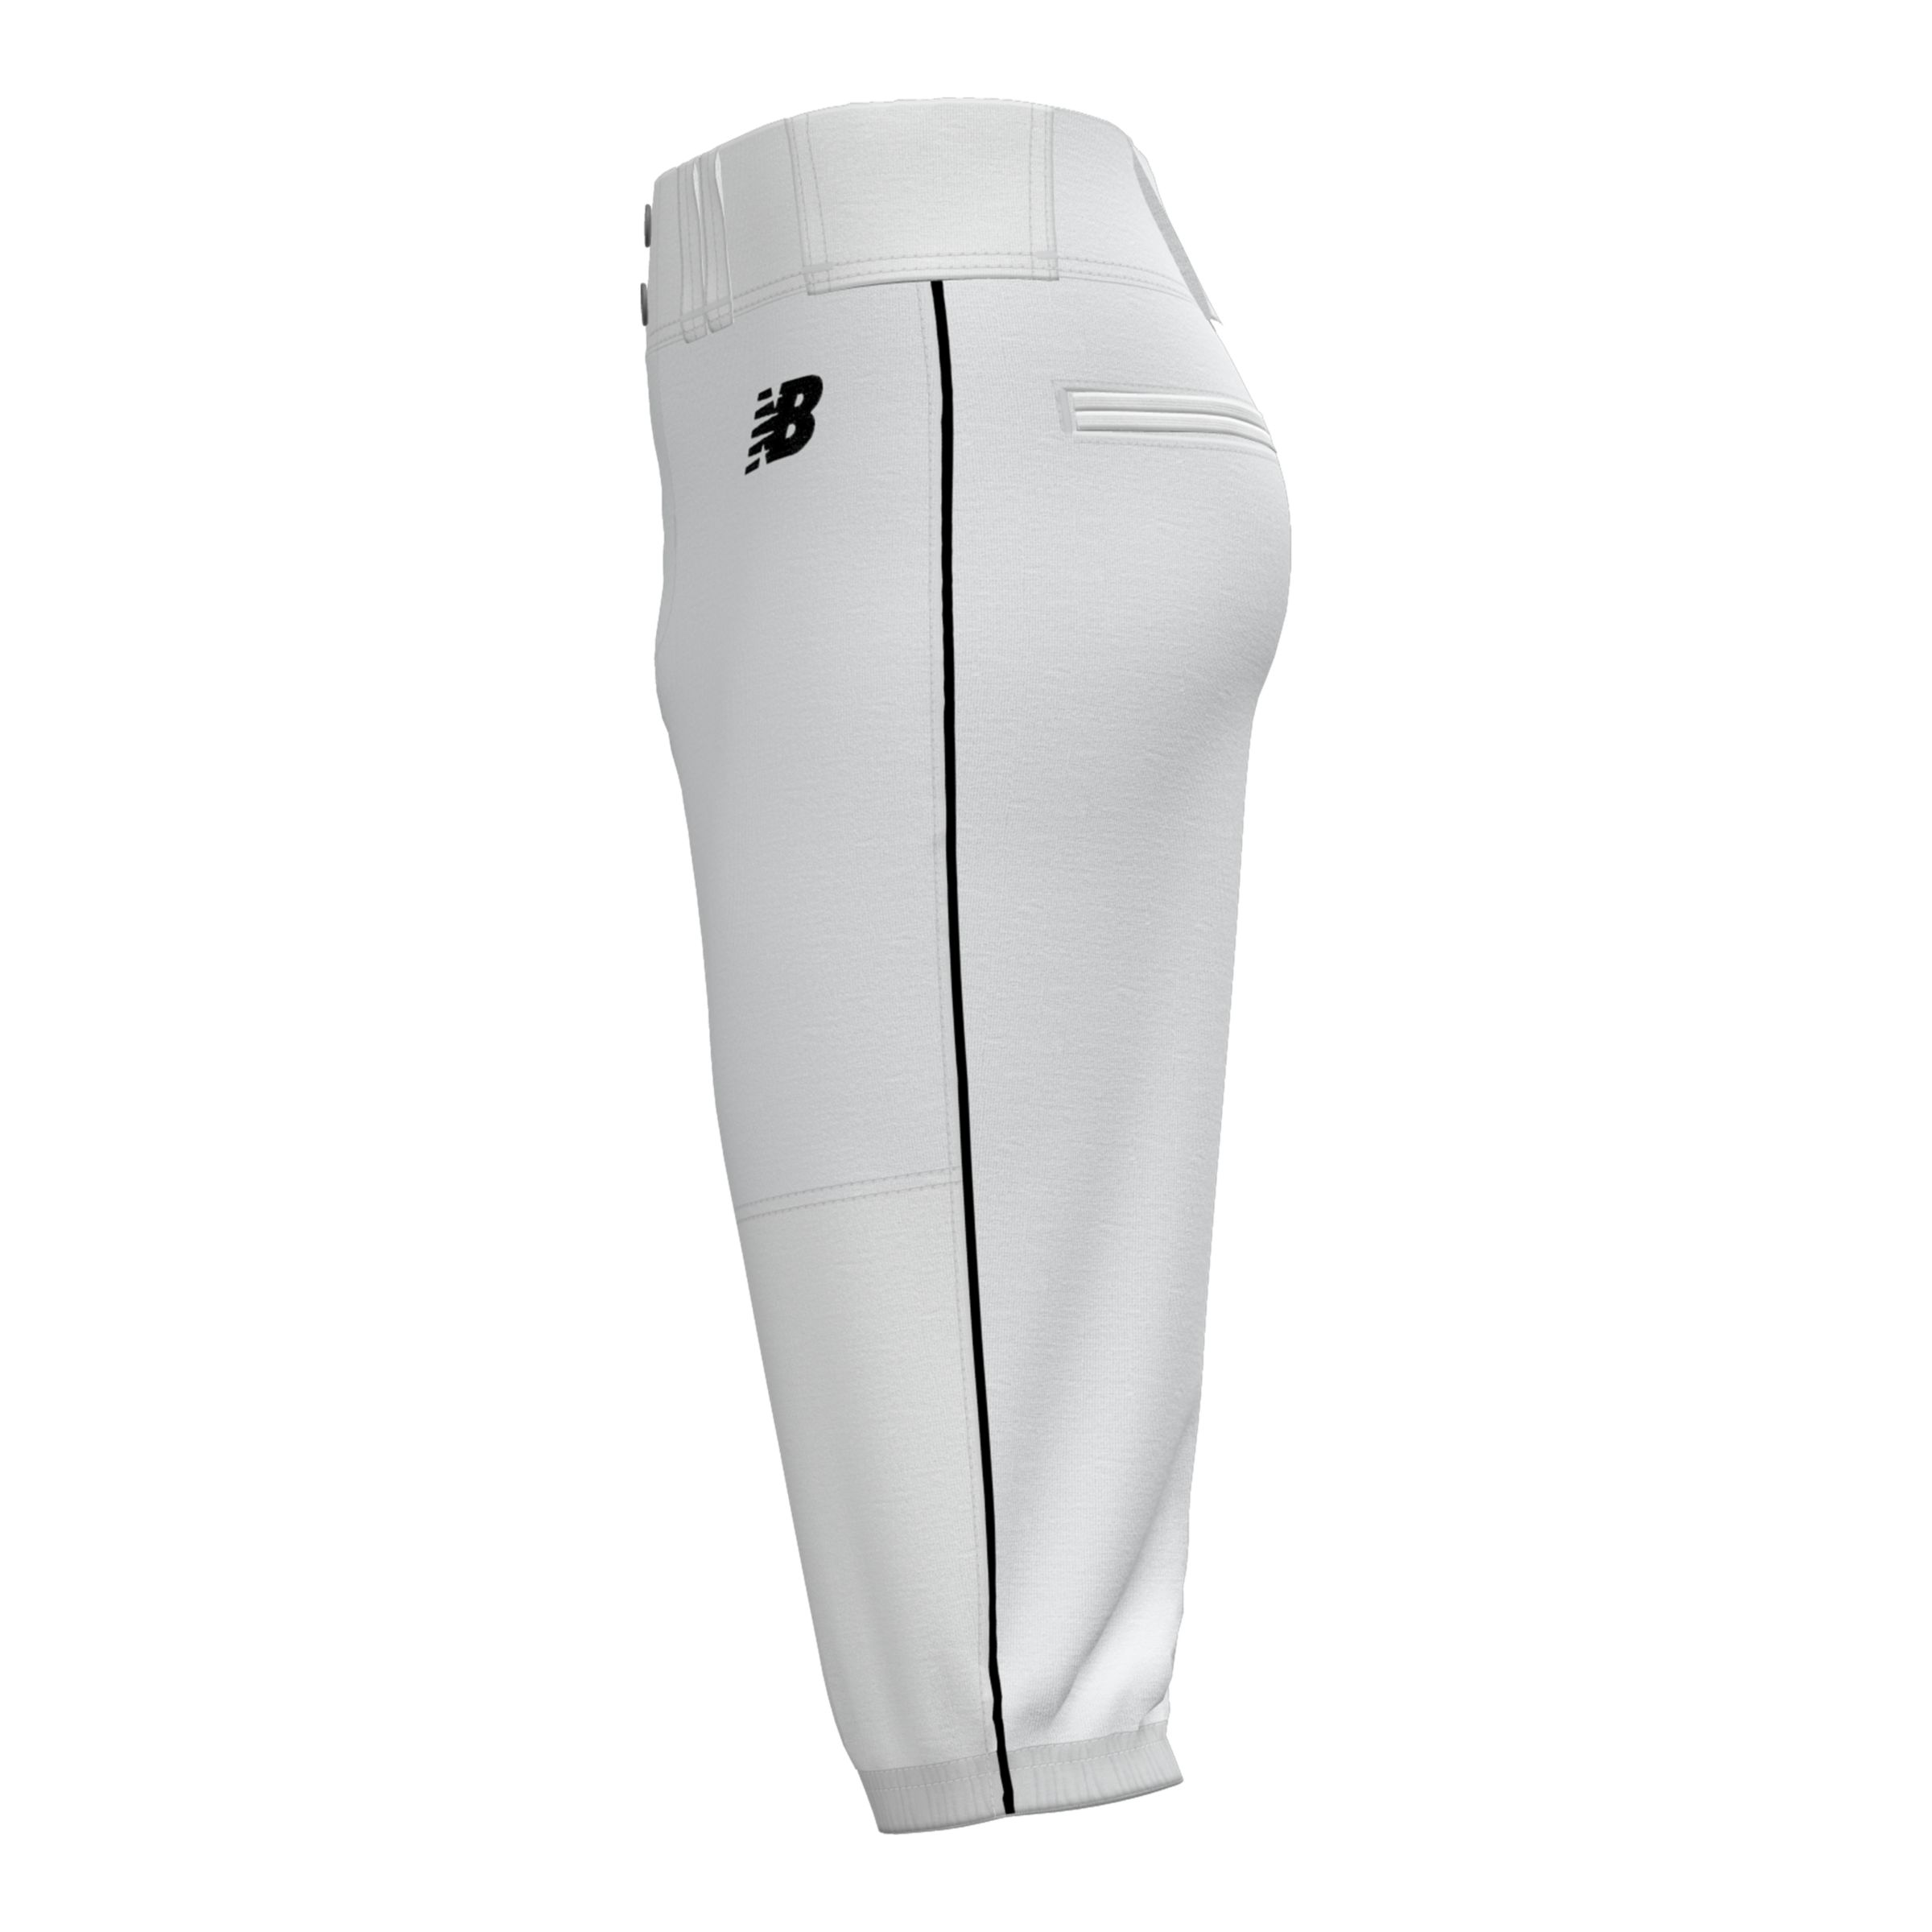 new balance white baseball pants